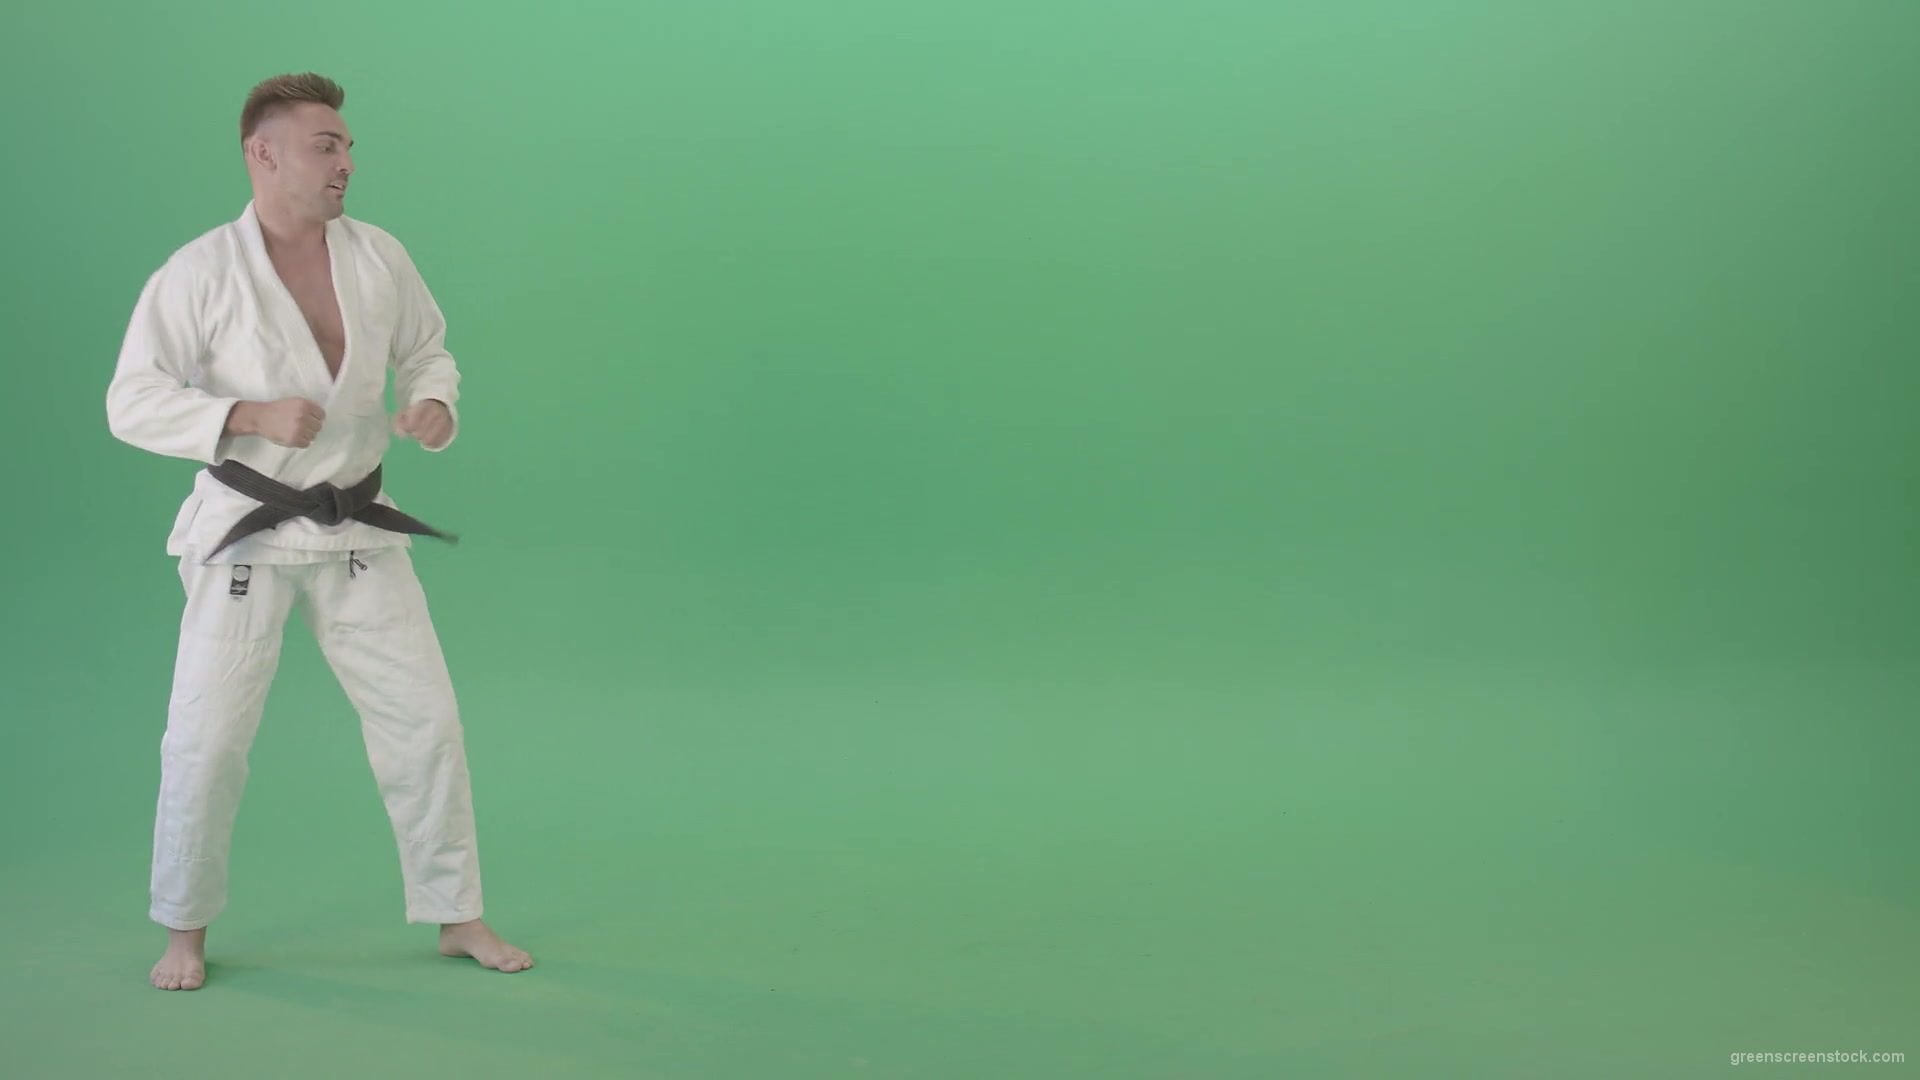 Ju-jutsu-young-man-training-slowly-karate-isolated-on-green-screen-4K-Video-Footage-1920_009 Green Screen Stock